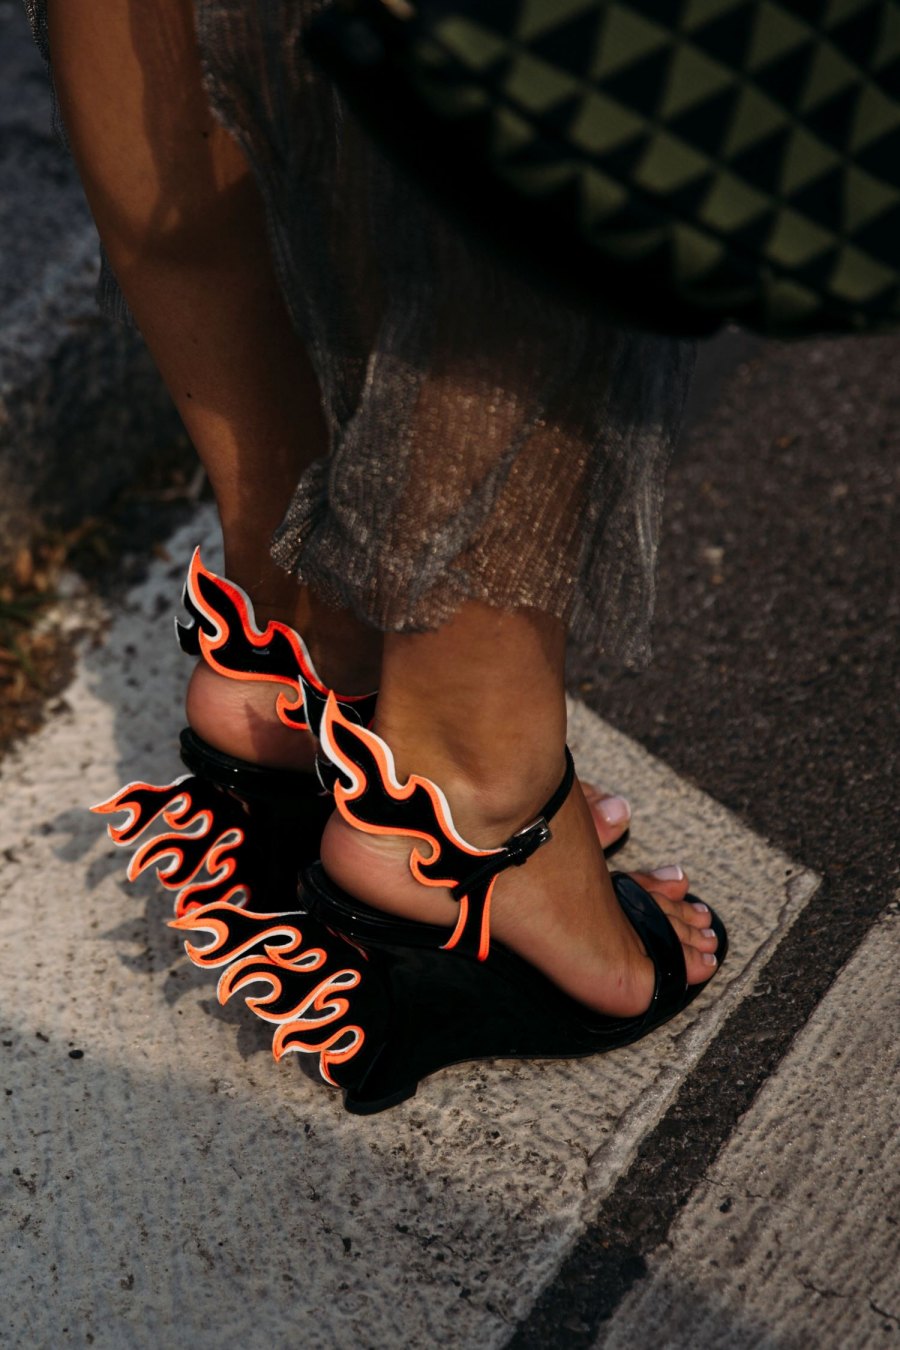 Surprise heels: Τα τακούνια  έκπληξη που θα κάνουν takeover στην γκαρνταρόμπα σου